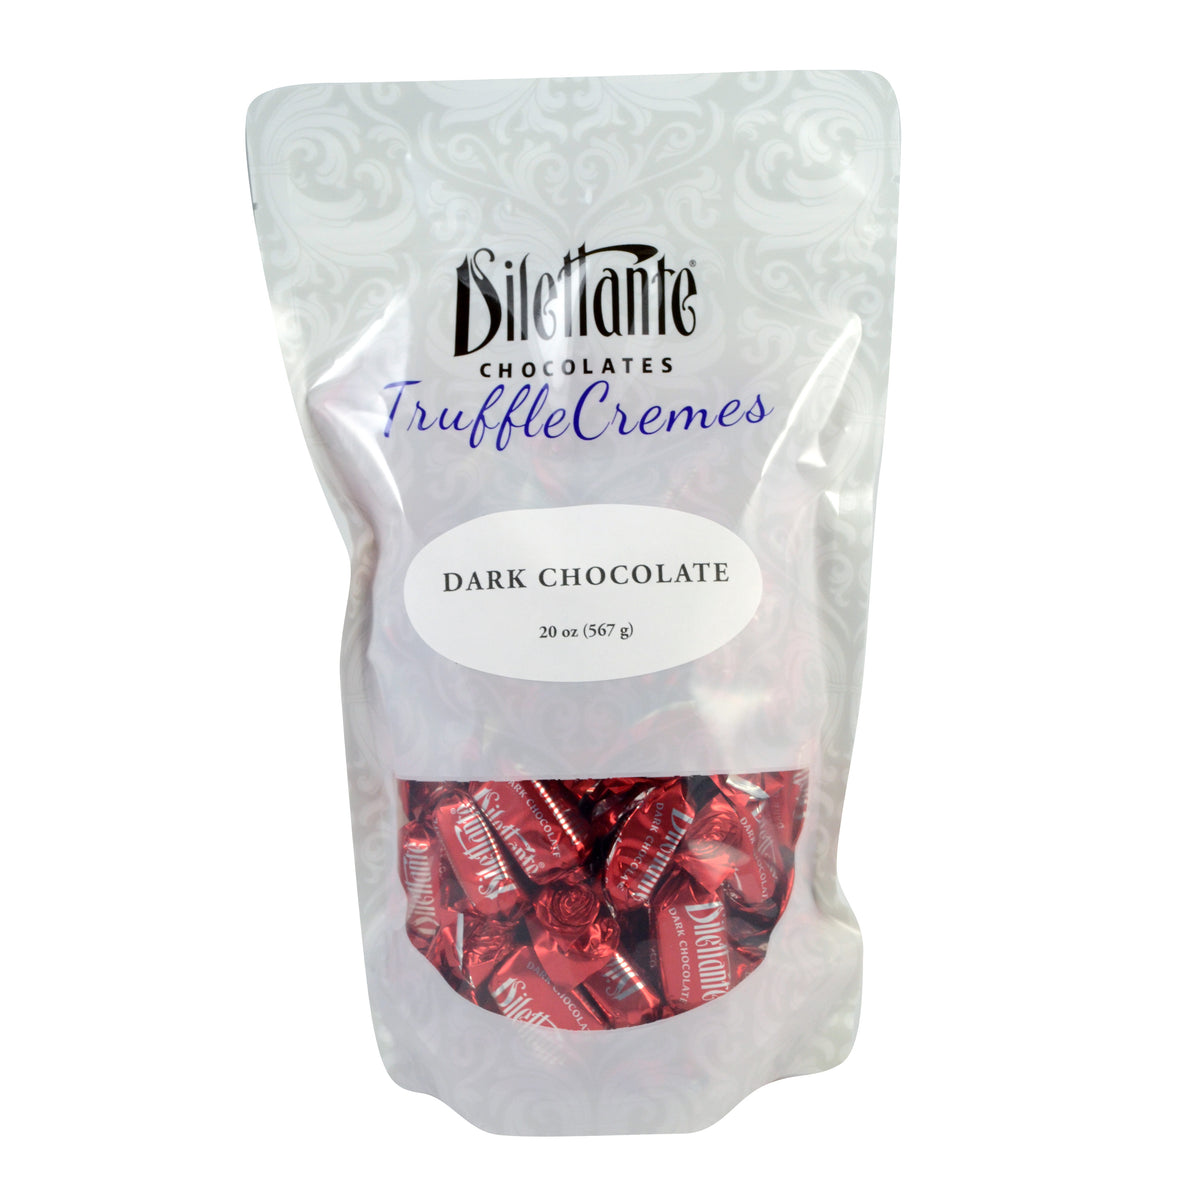 Dark Chocolate TruffleCremes - 20 oz